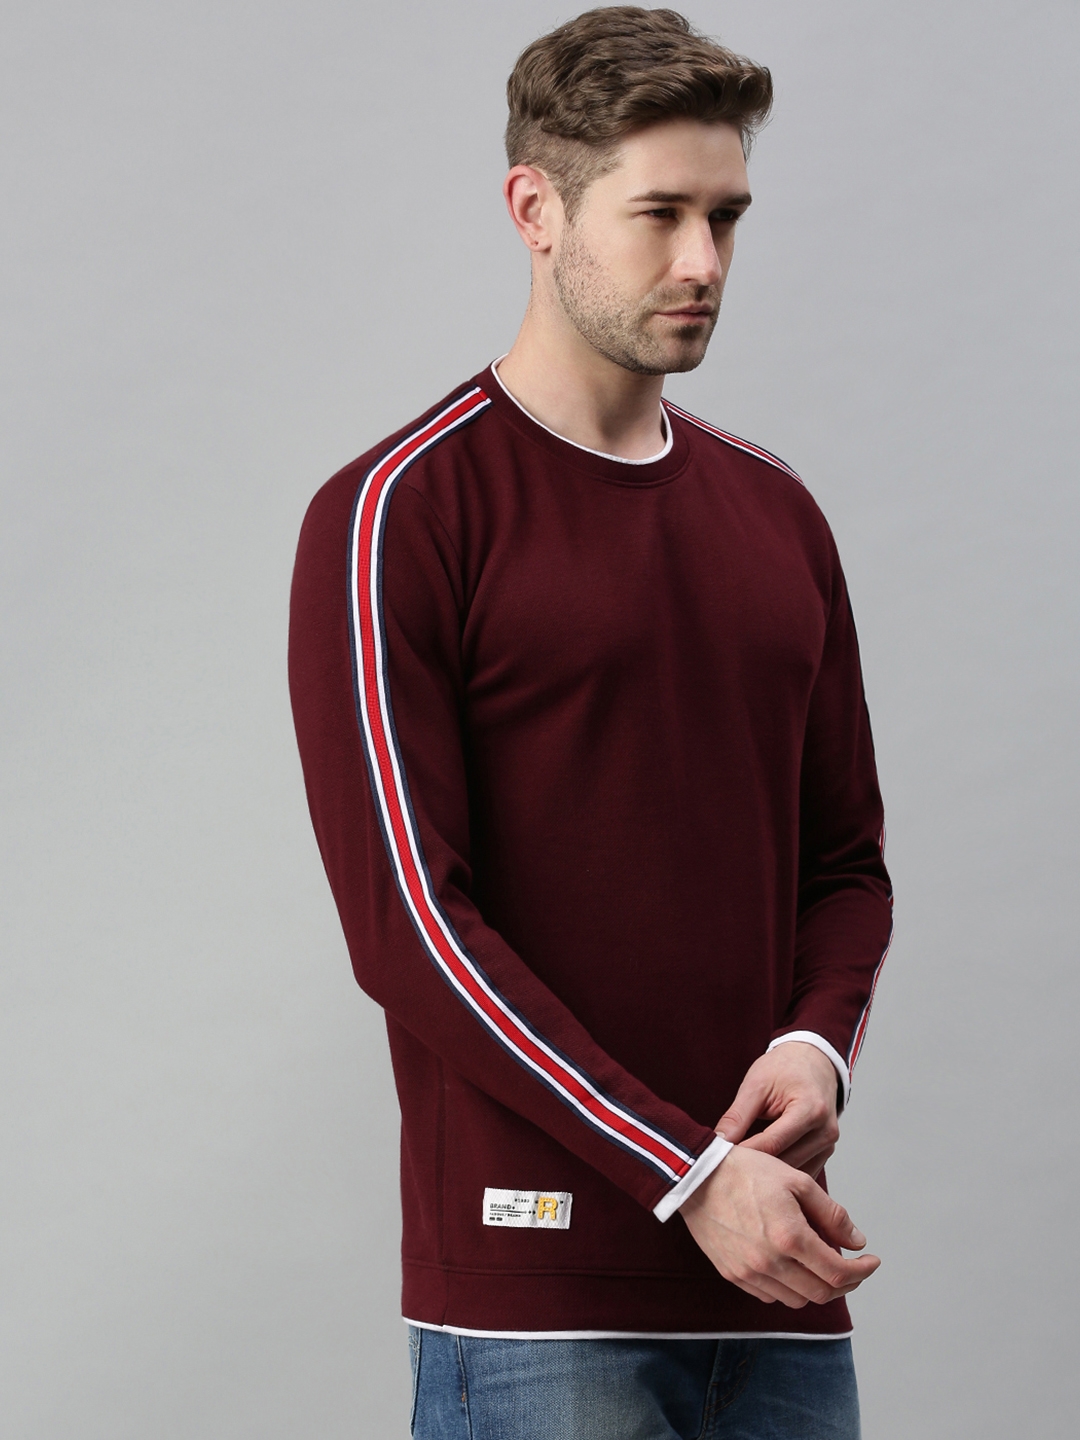 Men's Red Cotton Blend Solid Sweatshirts